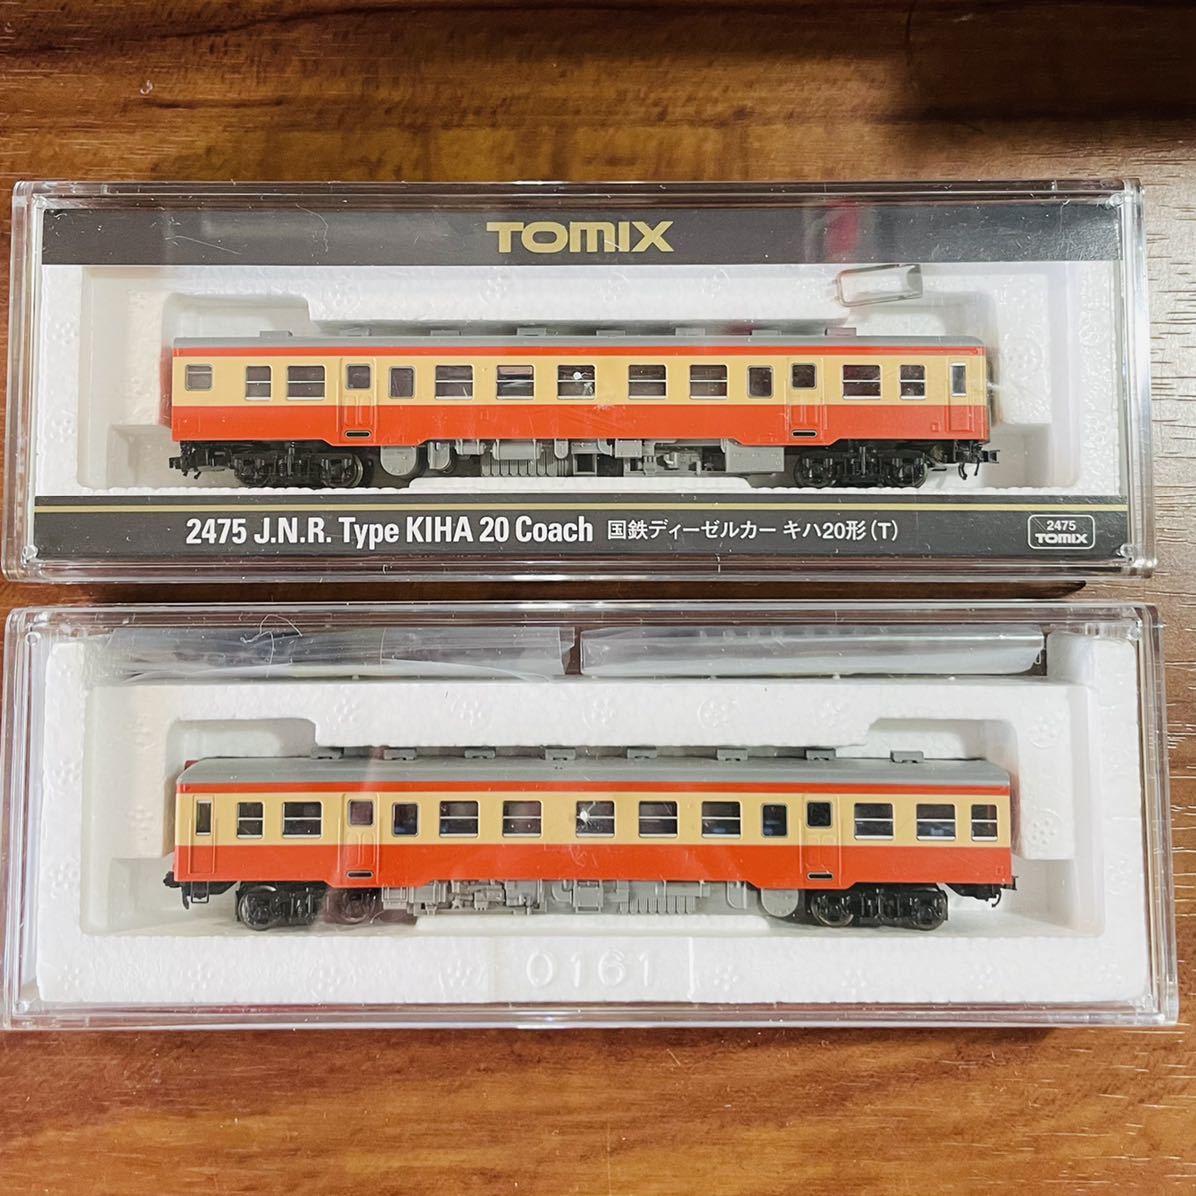 TOMIXトミックス 92161 鉄道模型 Nゲージ 国鉄キハ 25形 ディーゼル 